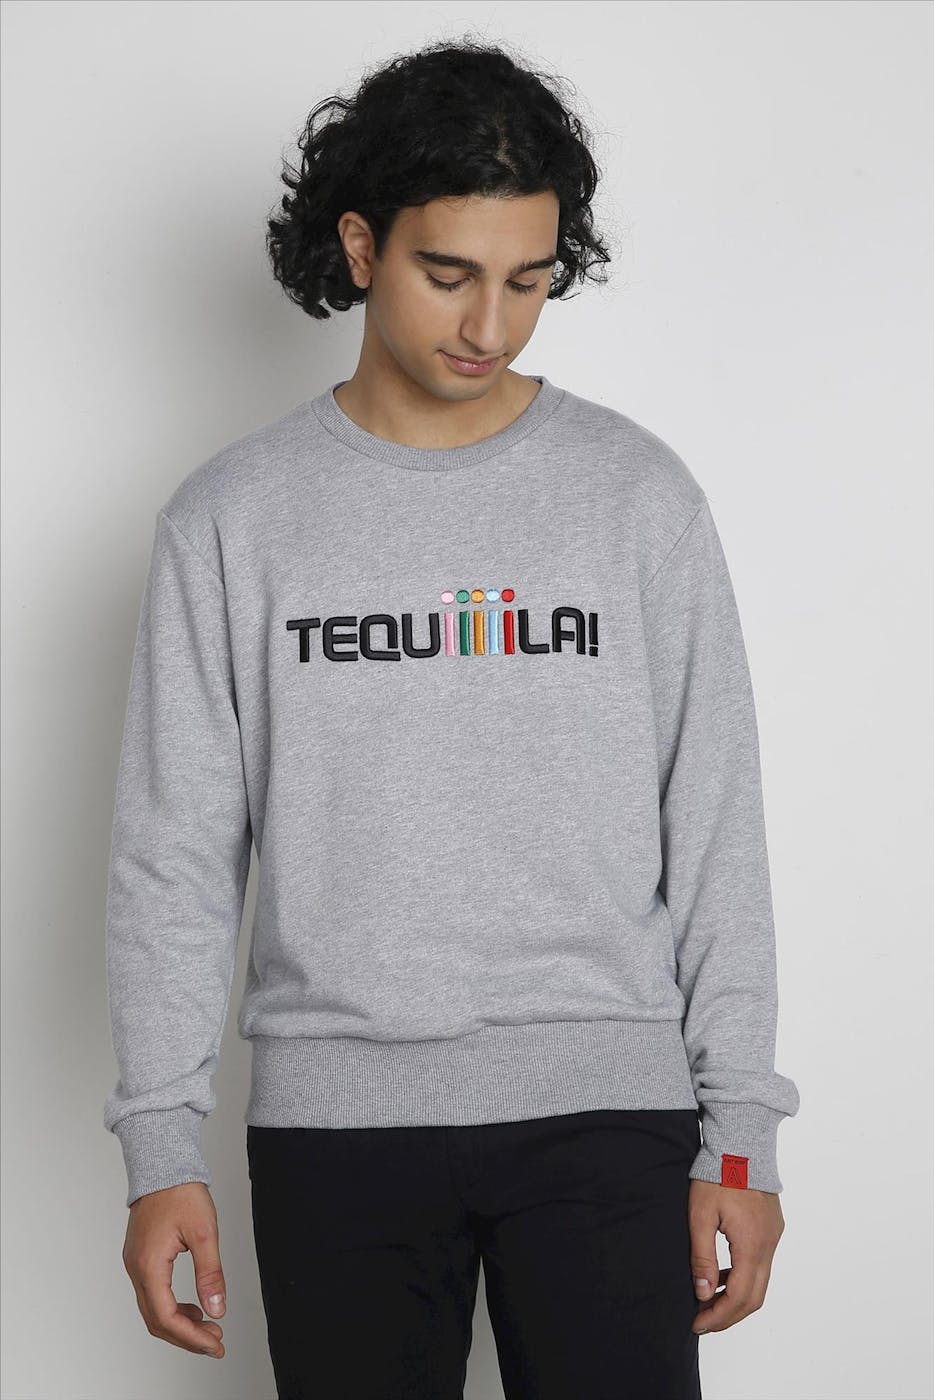 Antwrp - Grijze Tequila sweater